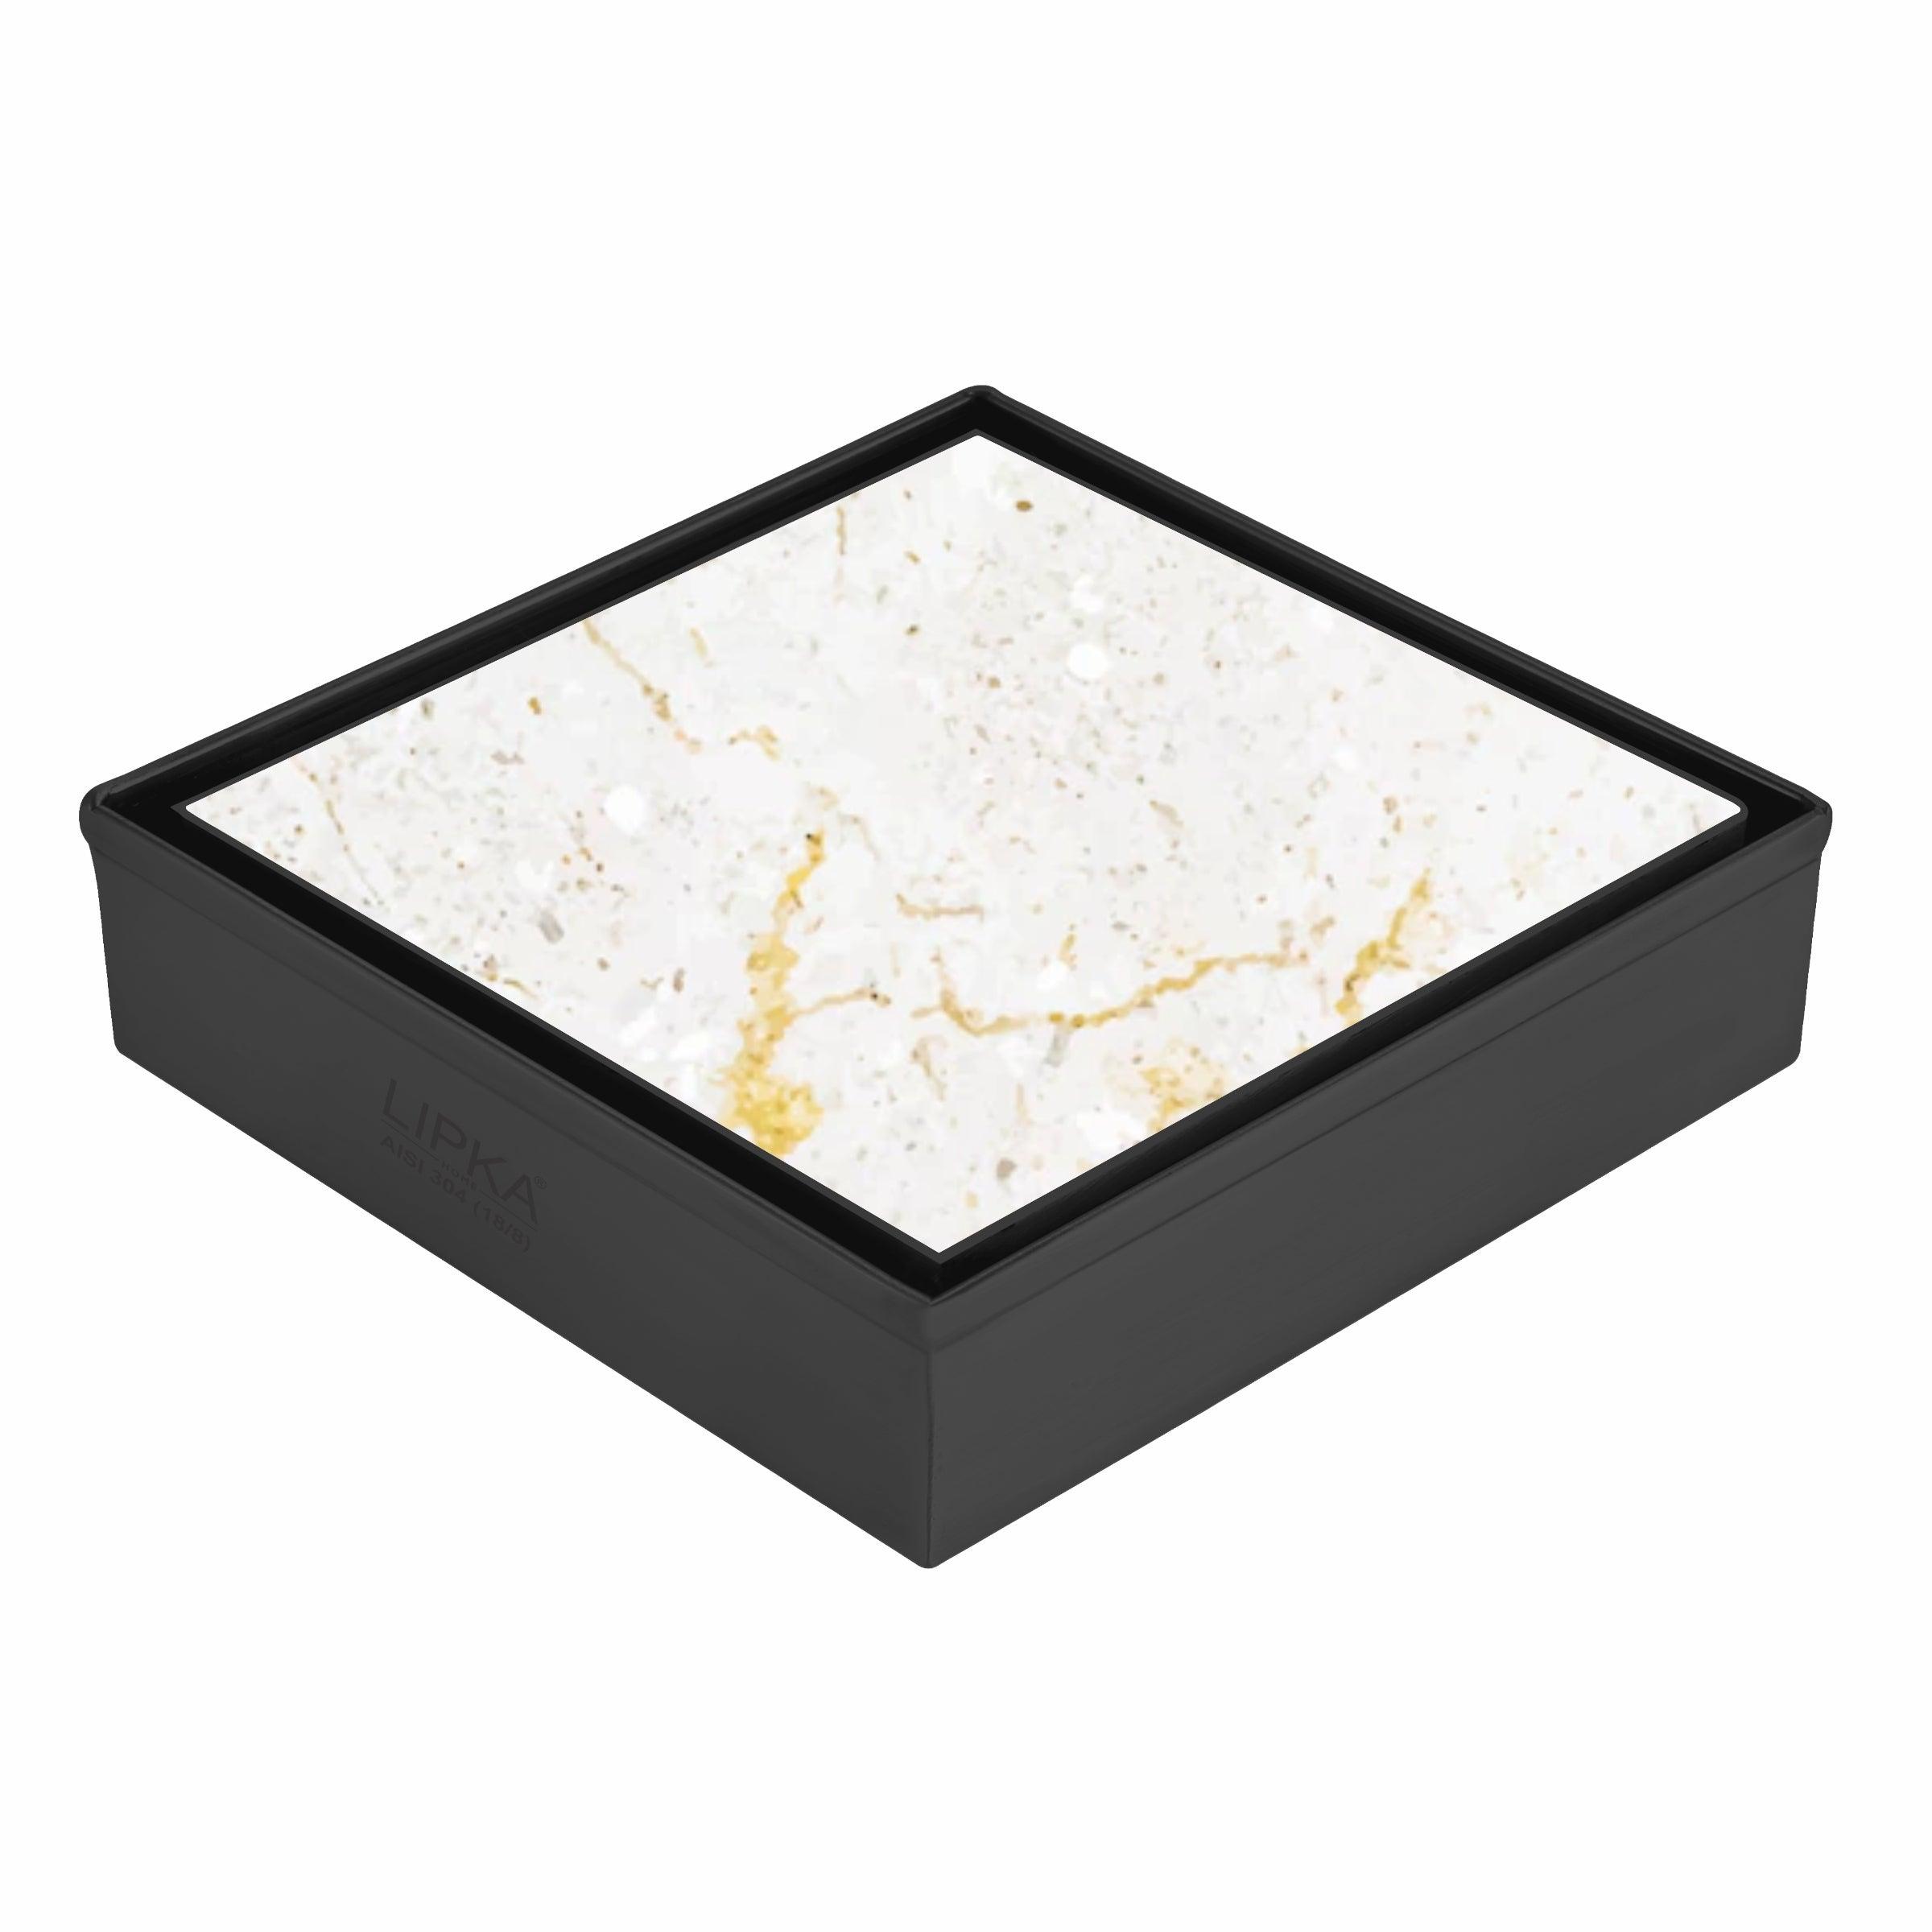 Marble Insert Square Floor Drain - Black (4 x 4 Inches) 